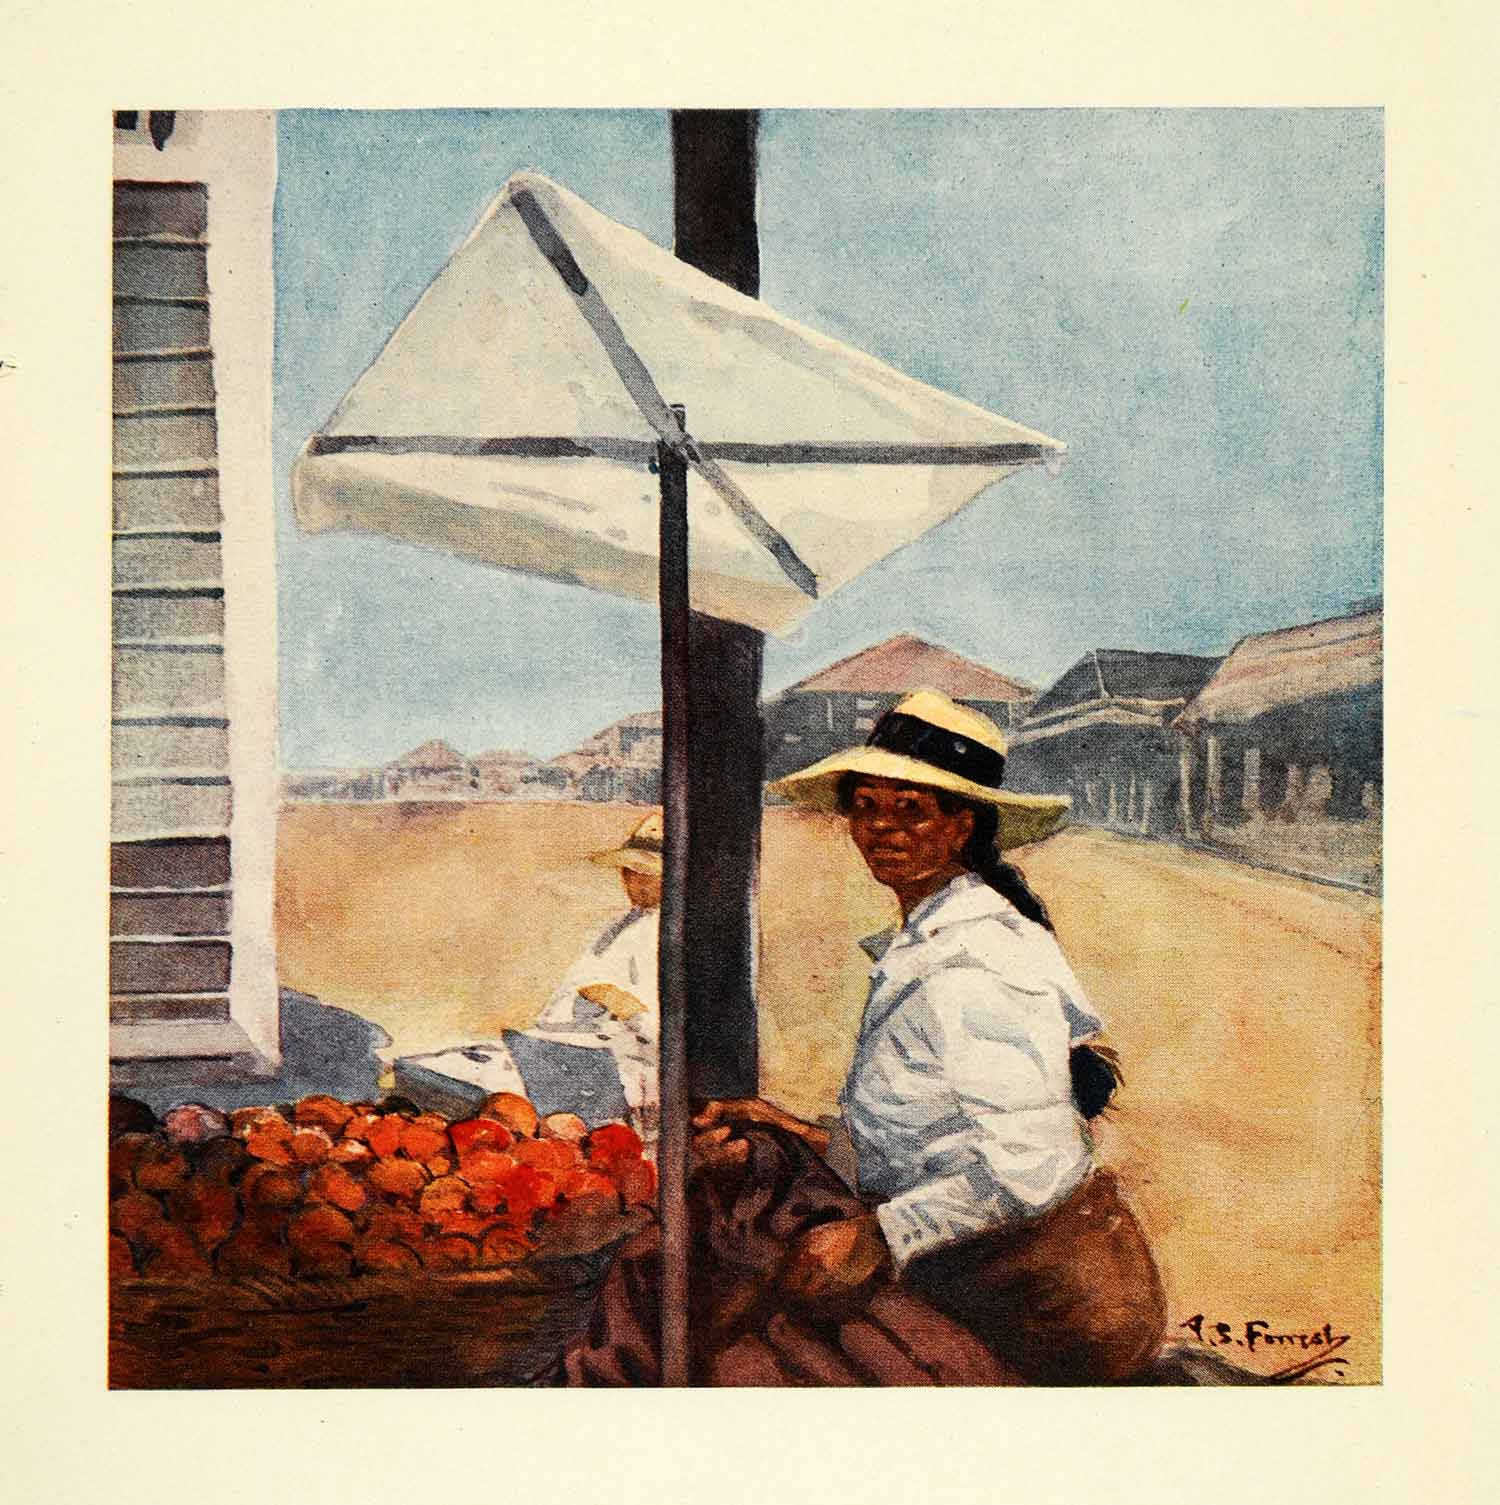 1912 Print Archibald Stevenson Forrest Art Mollendo Peru Fruit Stand Vendor